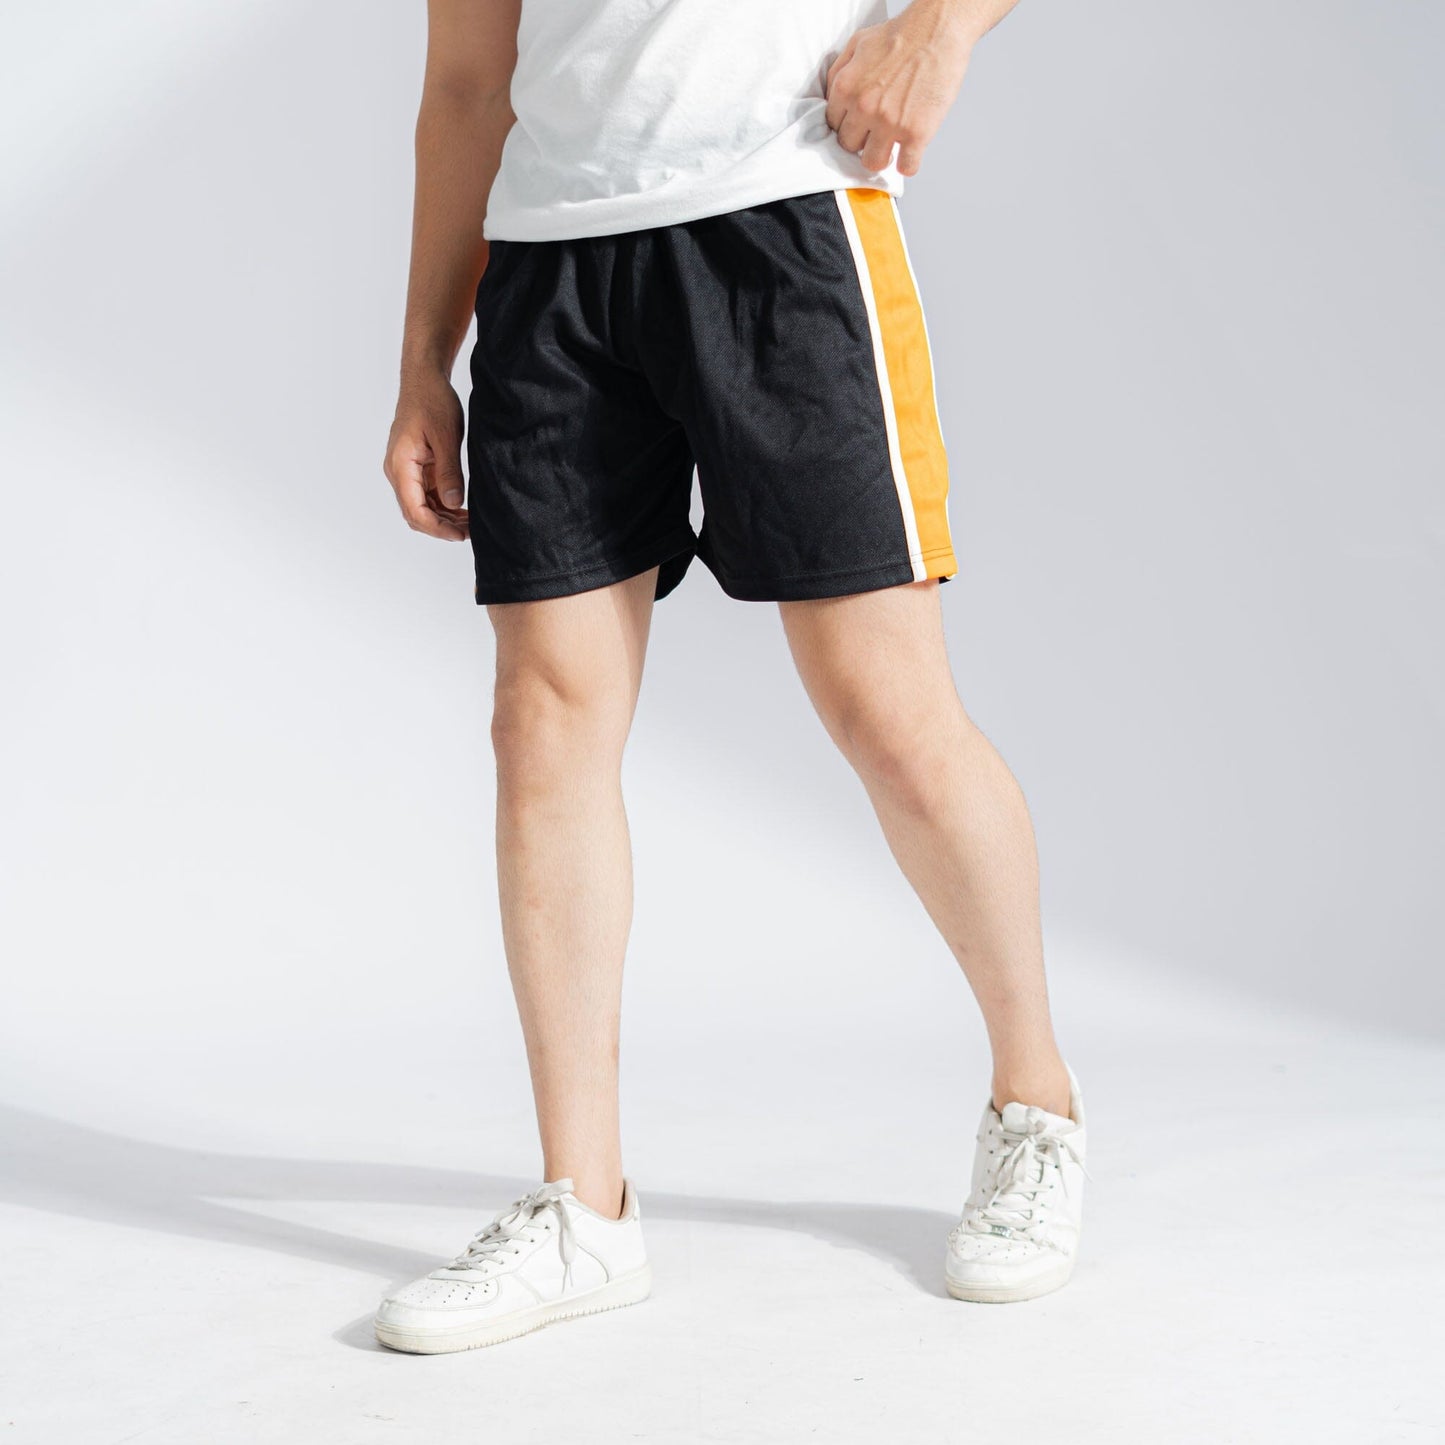 Falcon Men's Activewear Side Panel Shorts Men's Shorts HAS Apparel Black & Orange XS 